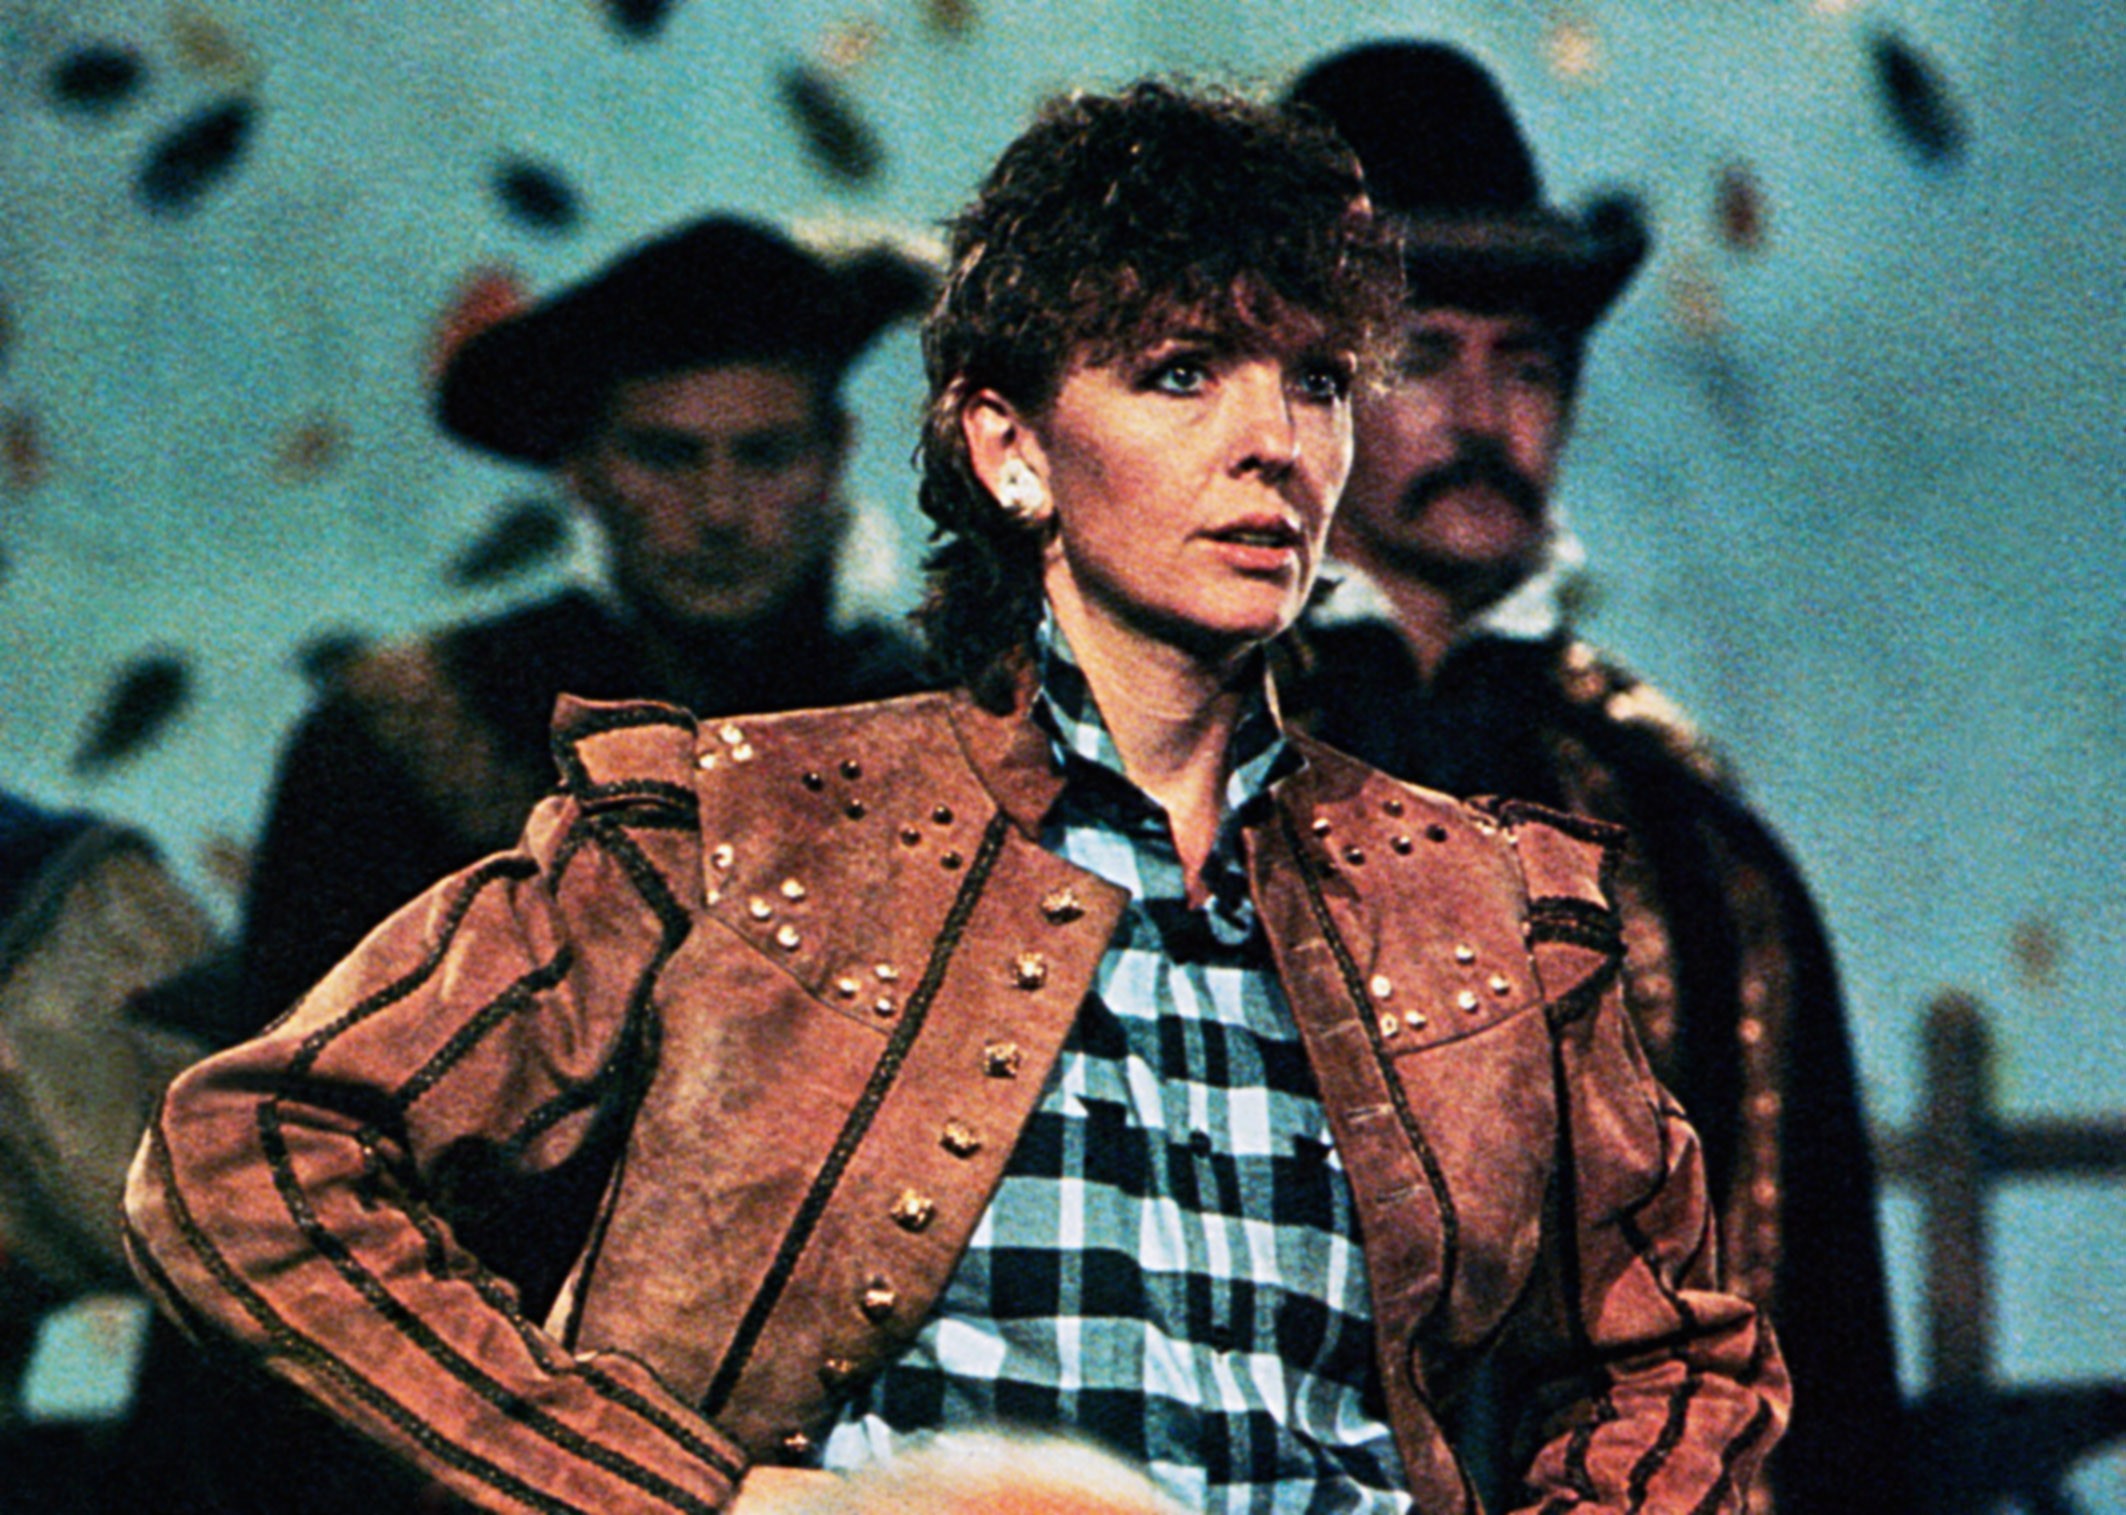 Diane Keaton as Charlie in The Little Drummer Girl, 1984.